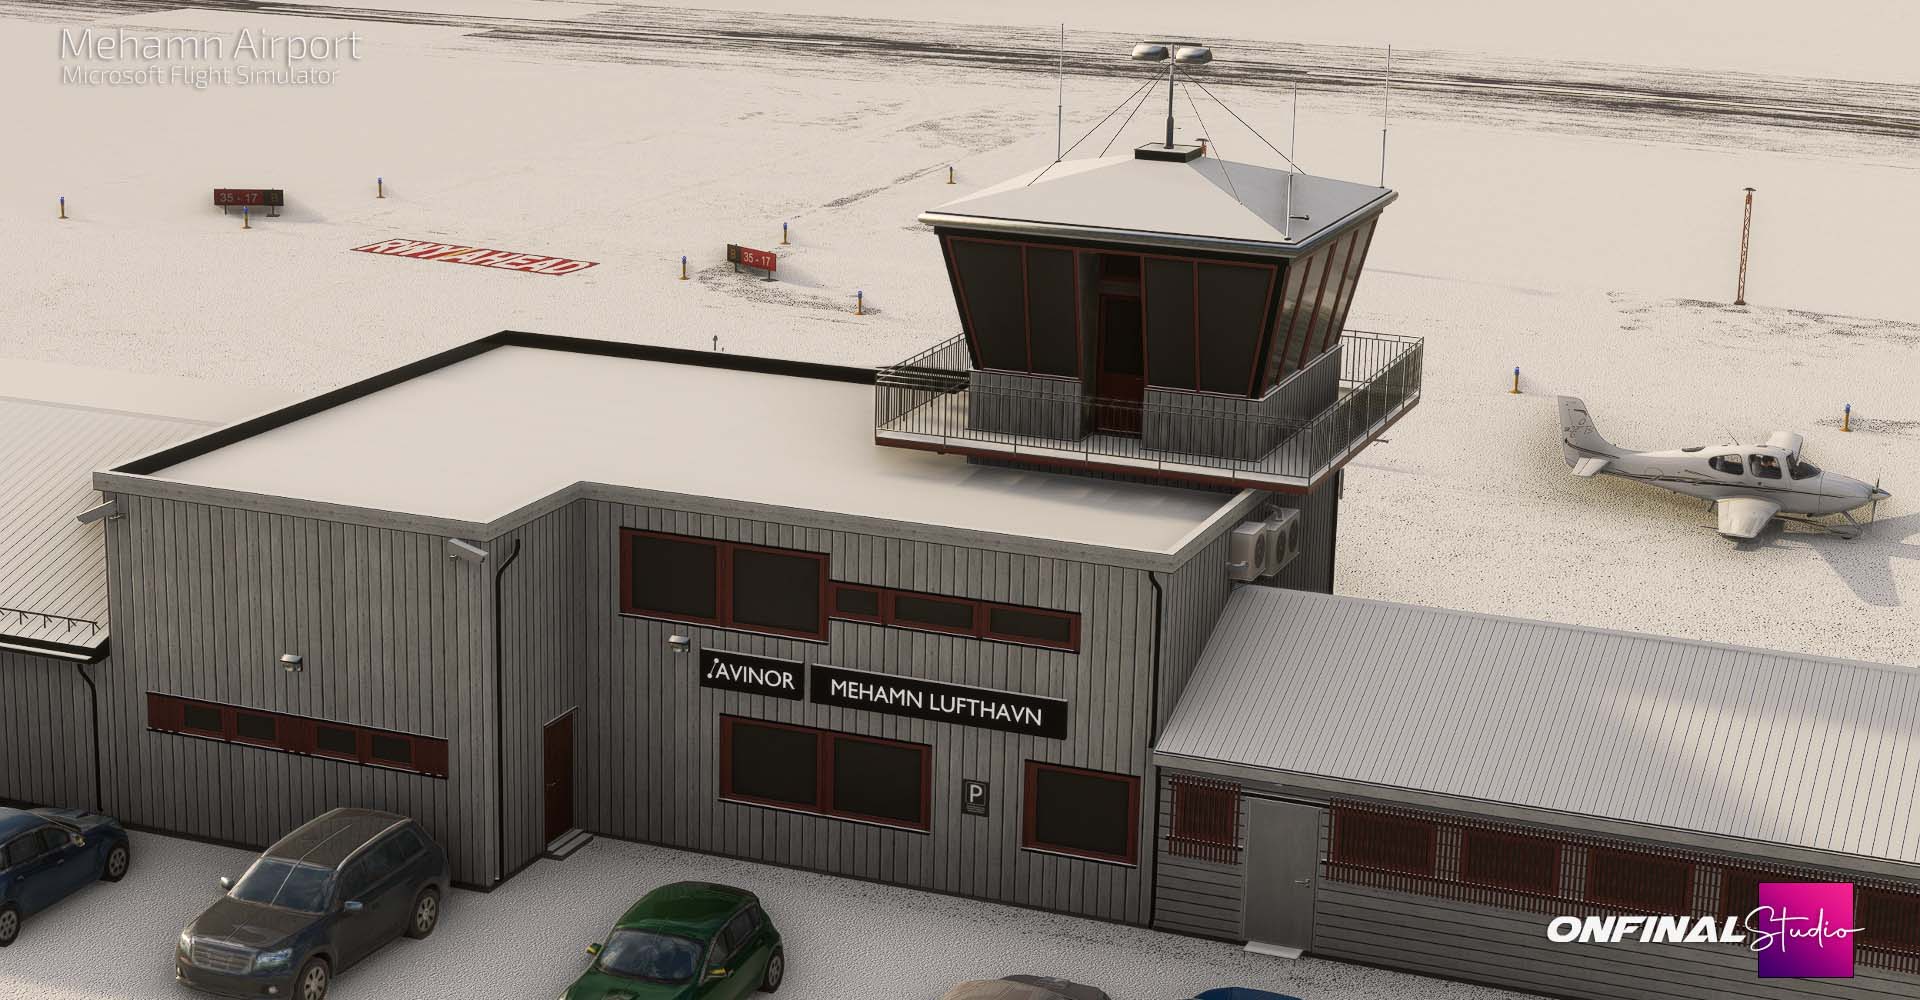 Mehamn Airport ENMH Scenery MSFS 2021 P3D Prepar3d